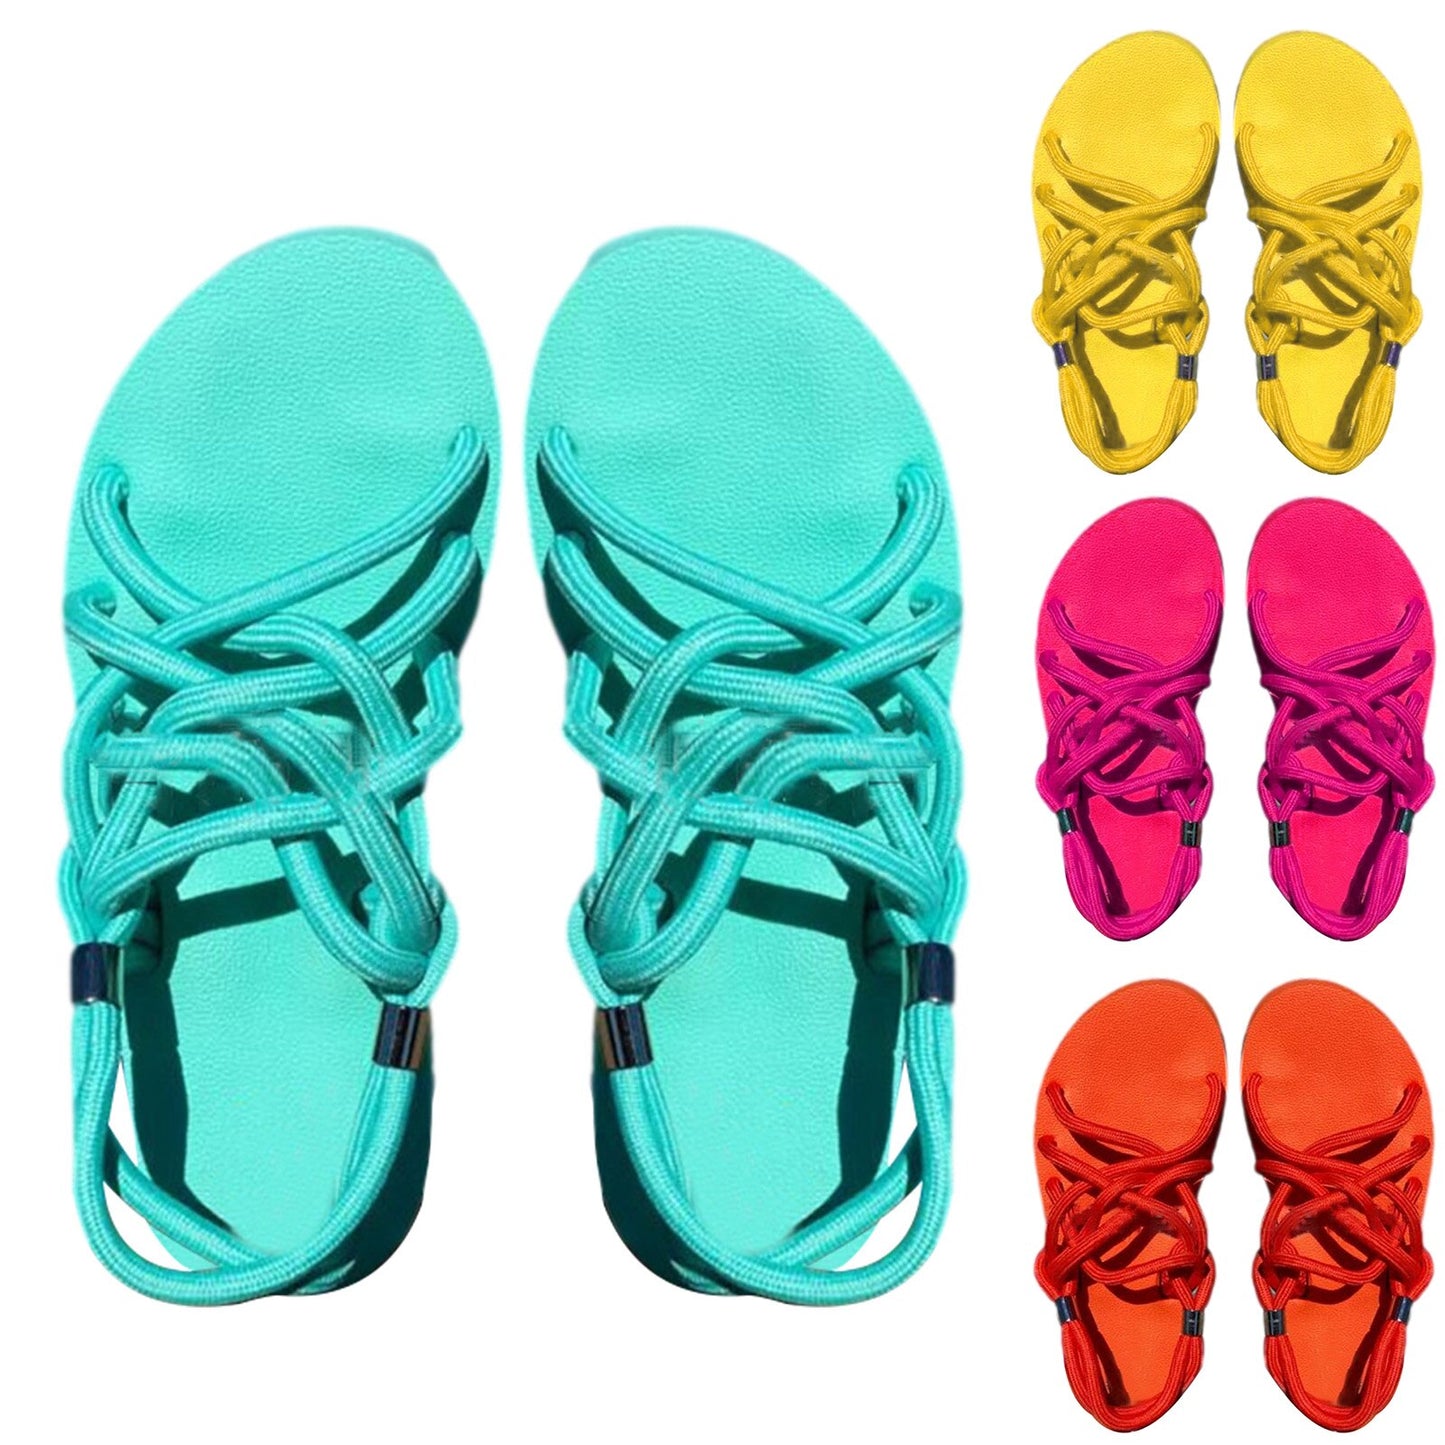 Women Sandals Platform Sandals Shoes Women Sandals Summer Flat Braided Rope Sandals Beach Shoes